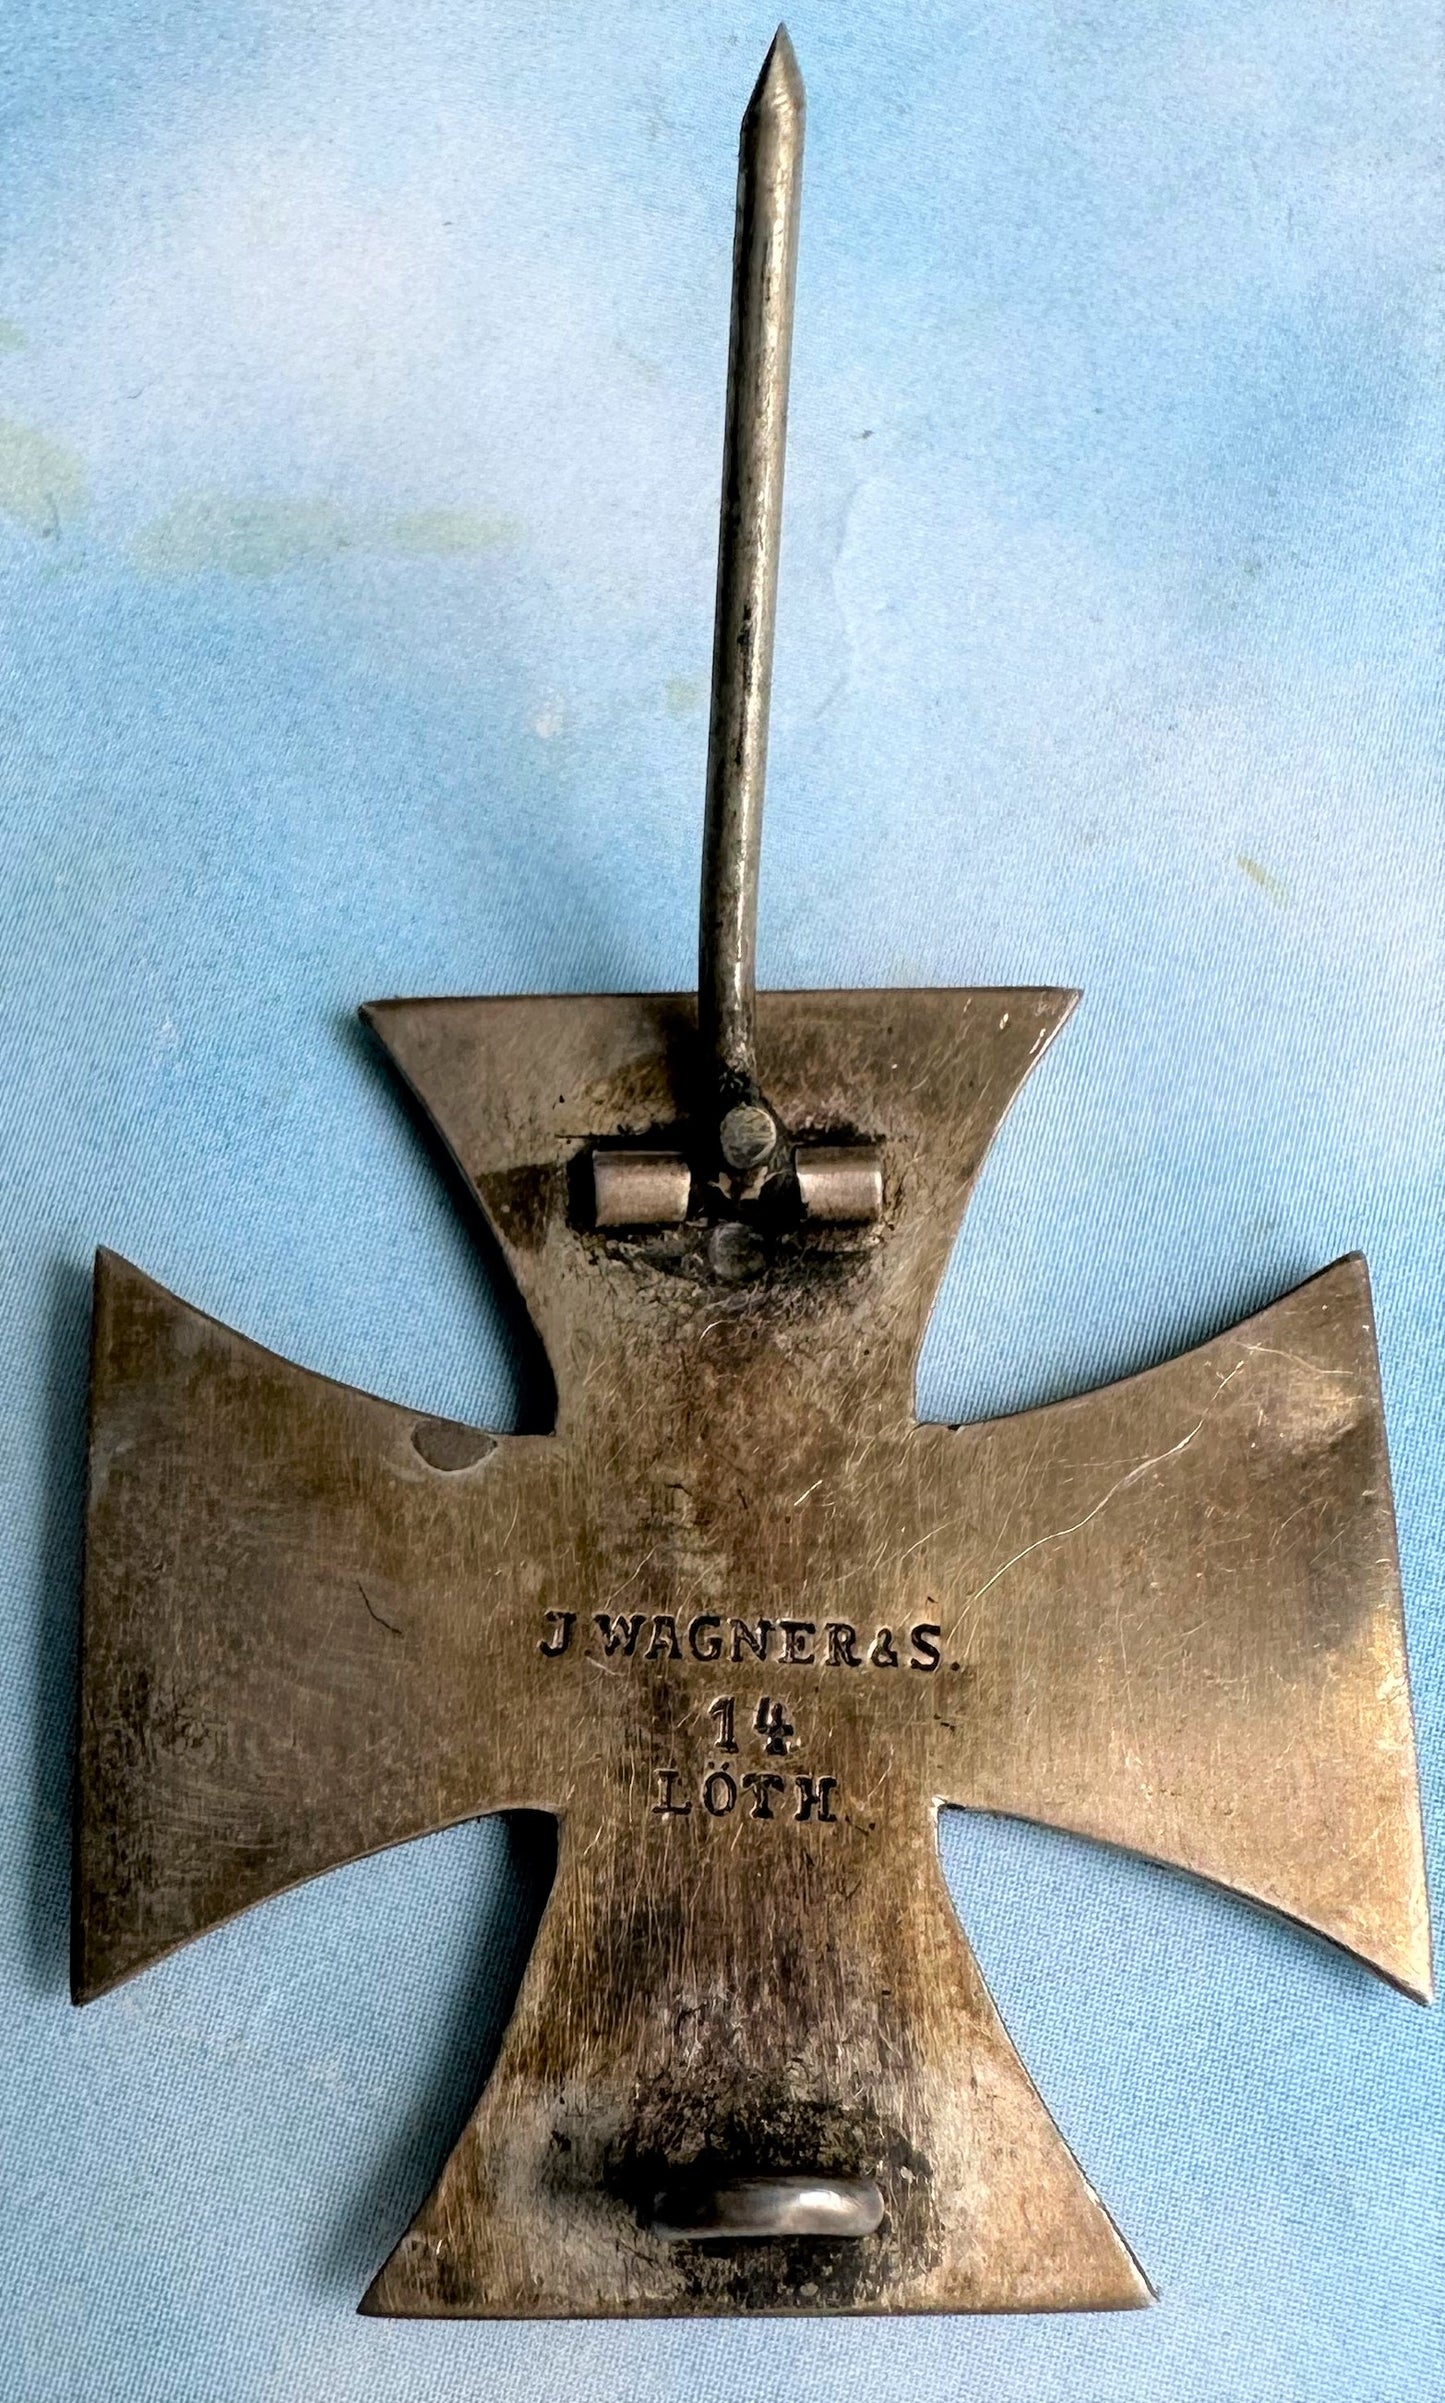 German Prinzengroße 1870 Iron Cross 1st Class hallmarked J. Wagner & Sohn - Derrittmeister Militaria Group